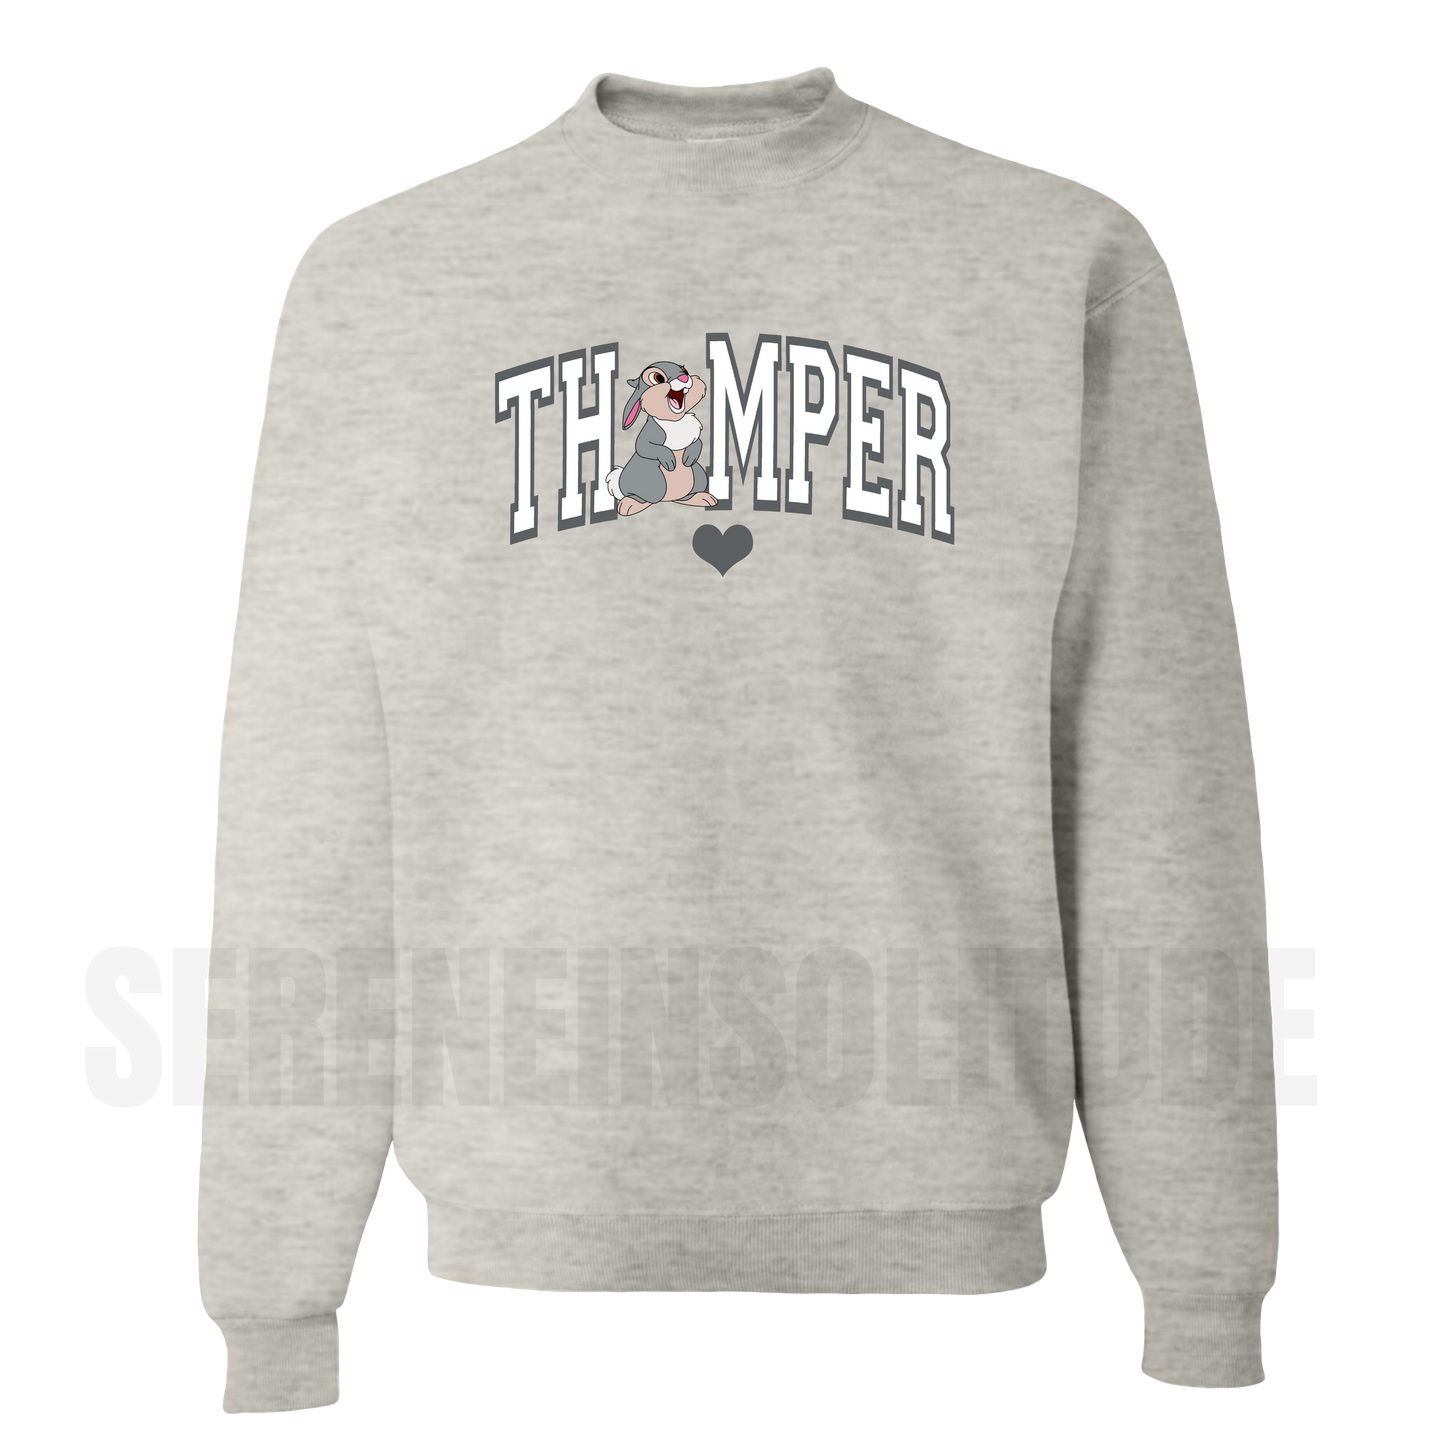 Thumper Sweatshirt